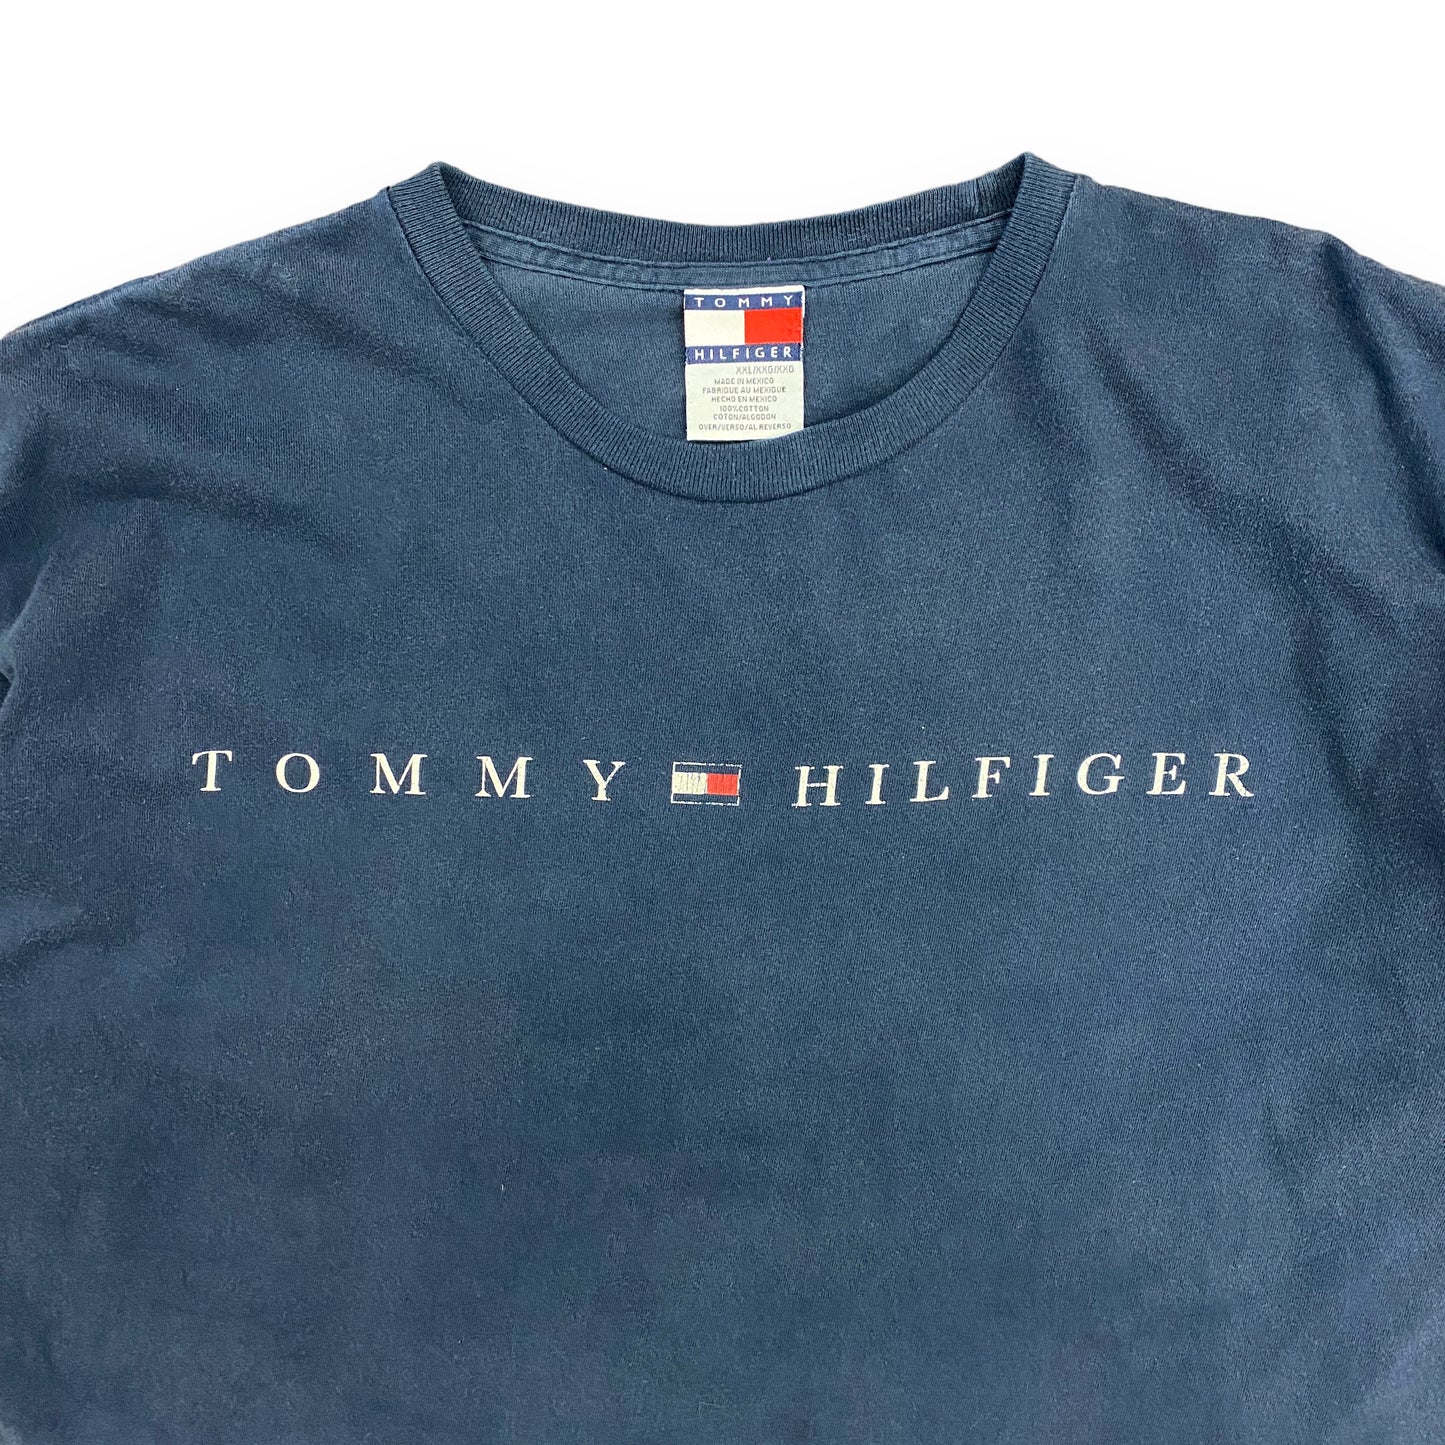 Vintage Tommy Hilfiger Oversized Logo Tee - Size XXL (Fits Boxy XL)